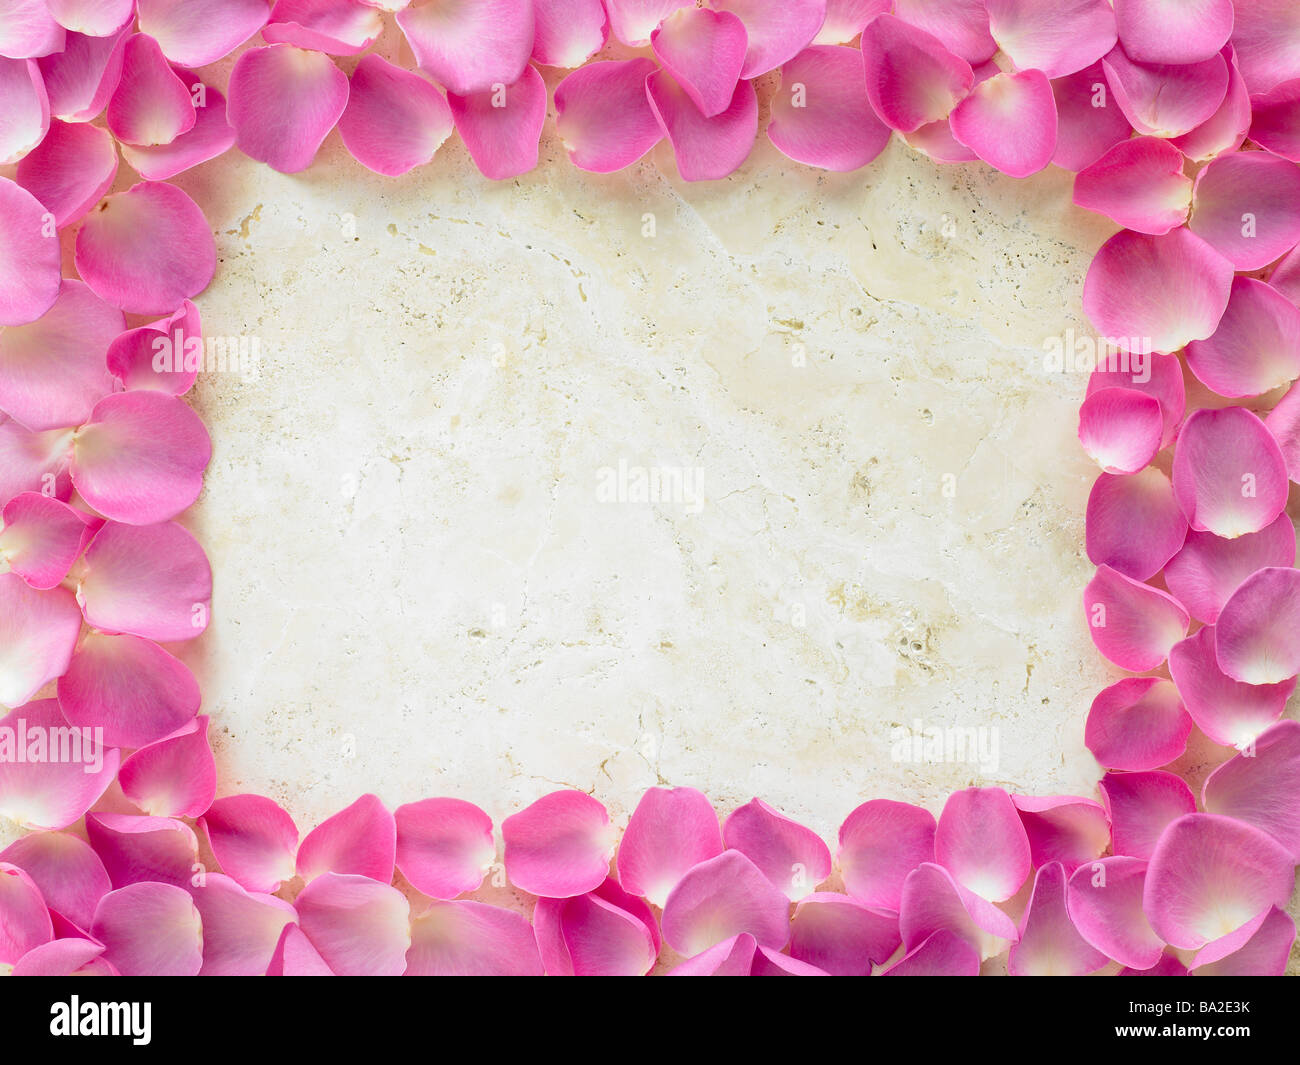 Di petali di rose cornice fotografica Foto Stock